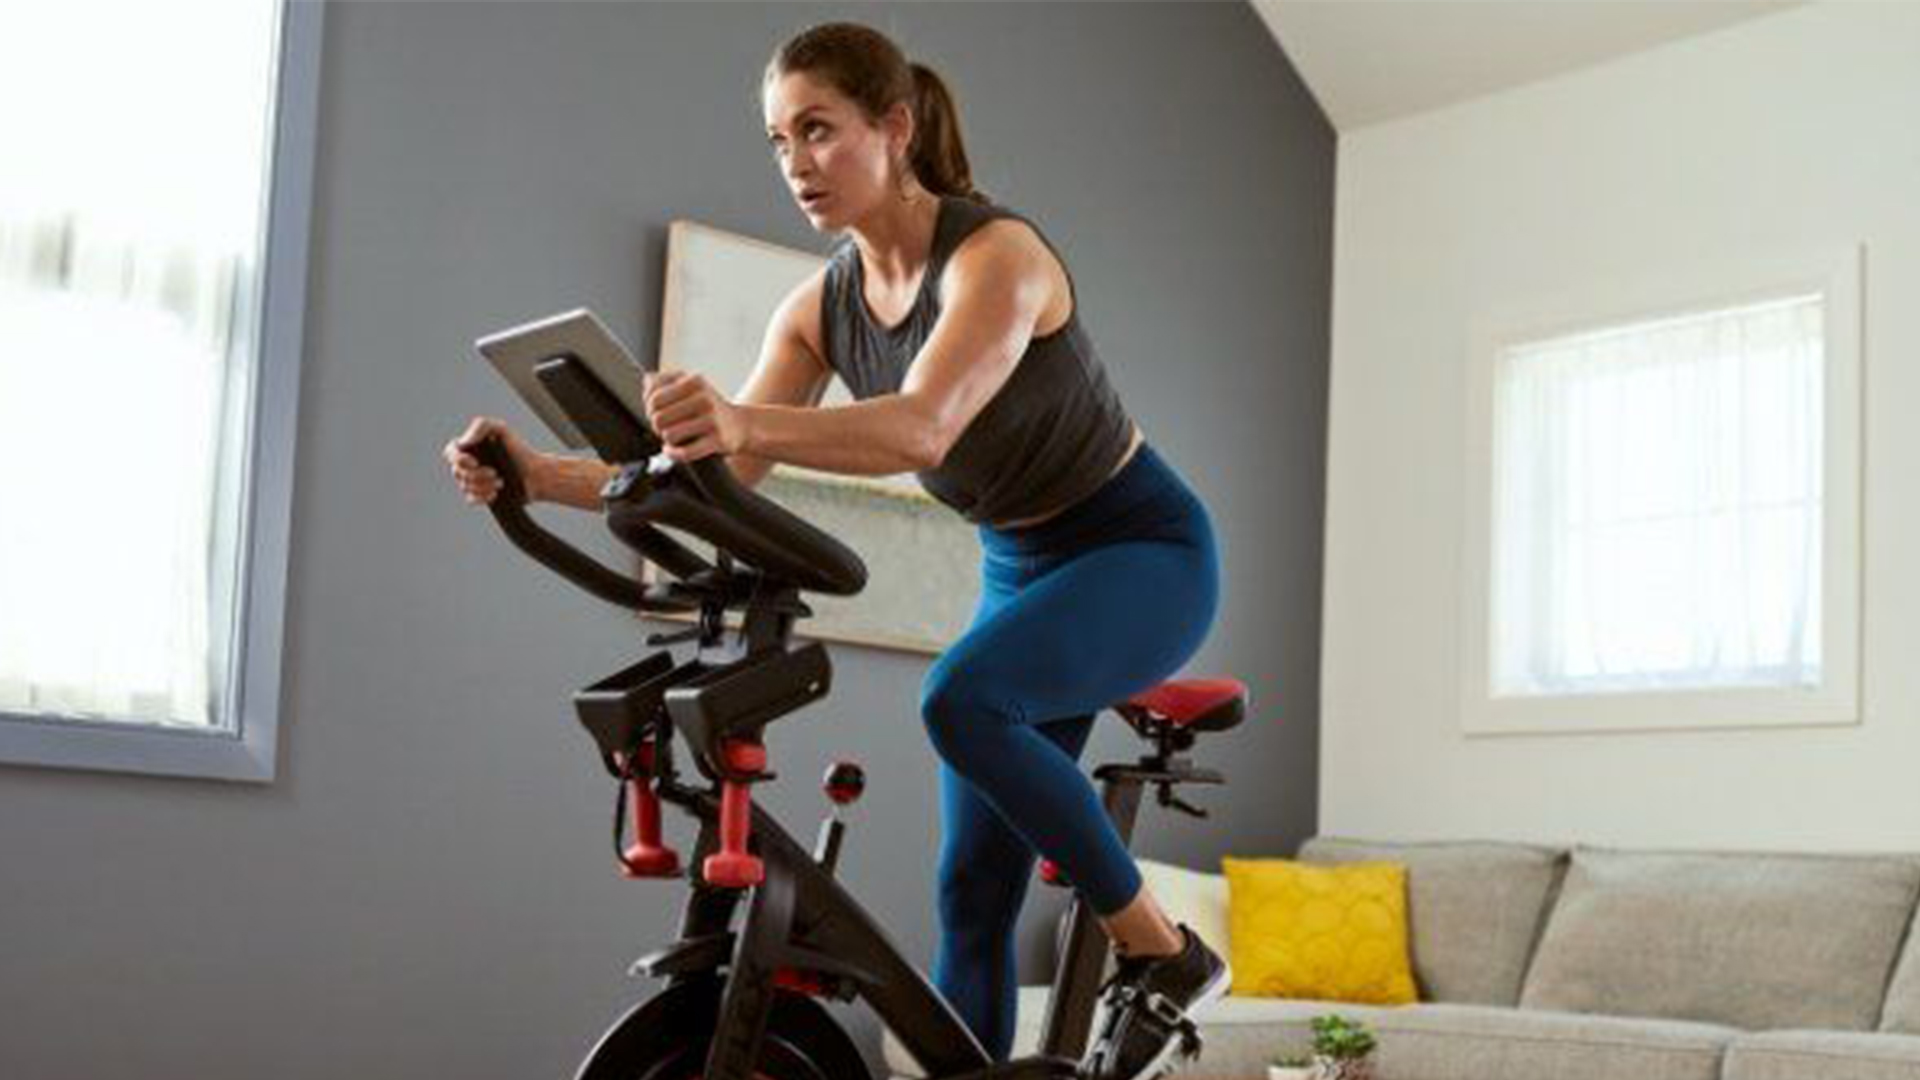 Exercise bikes - lower impact exercise